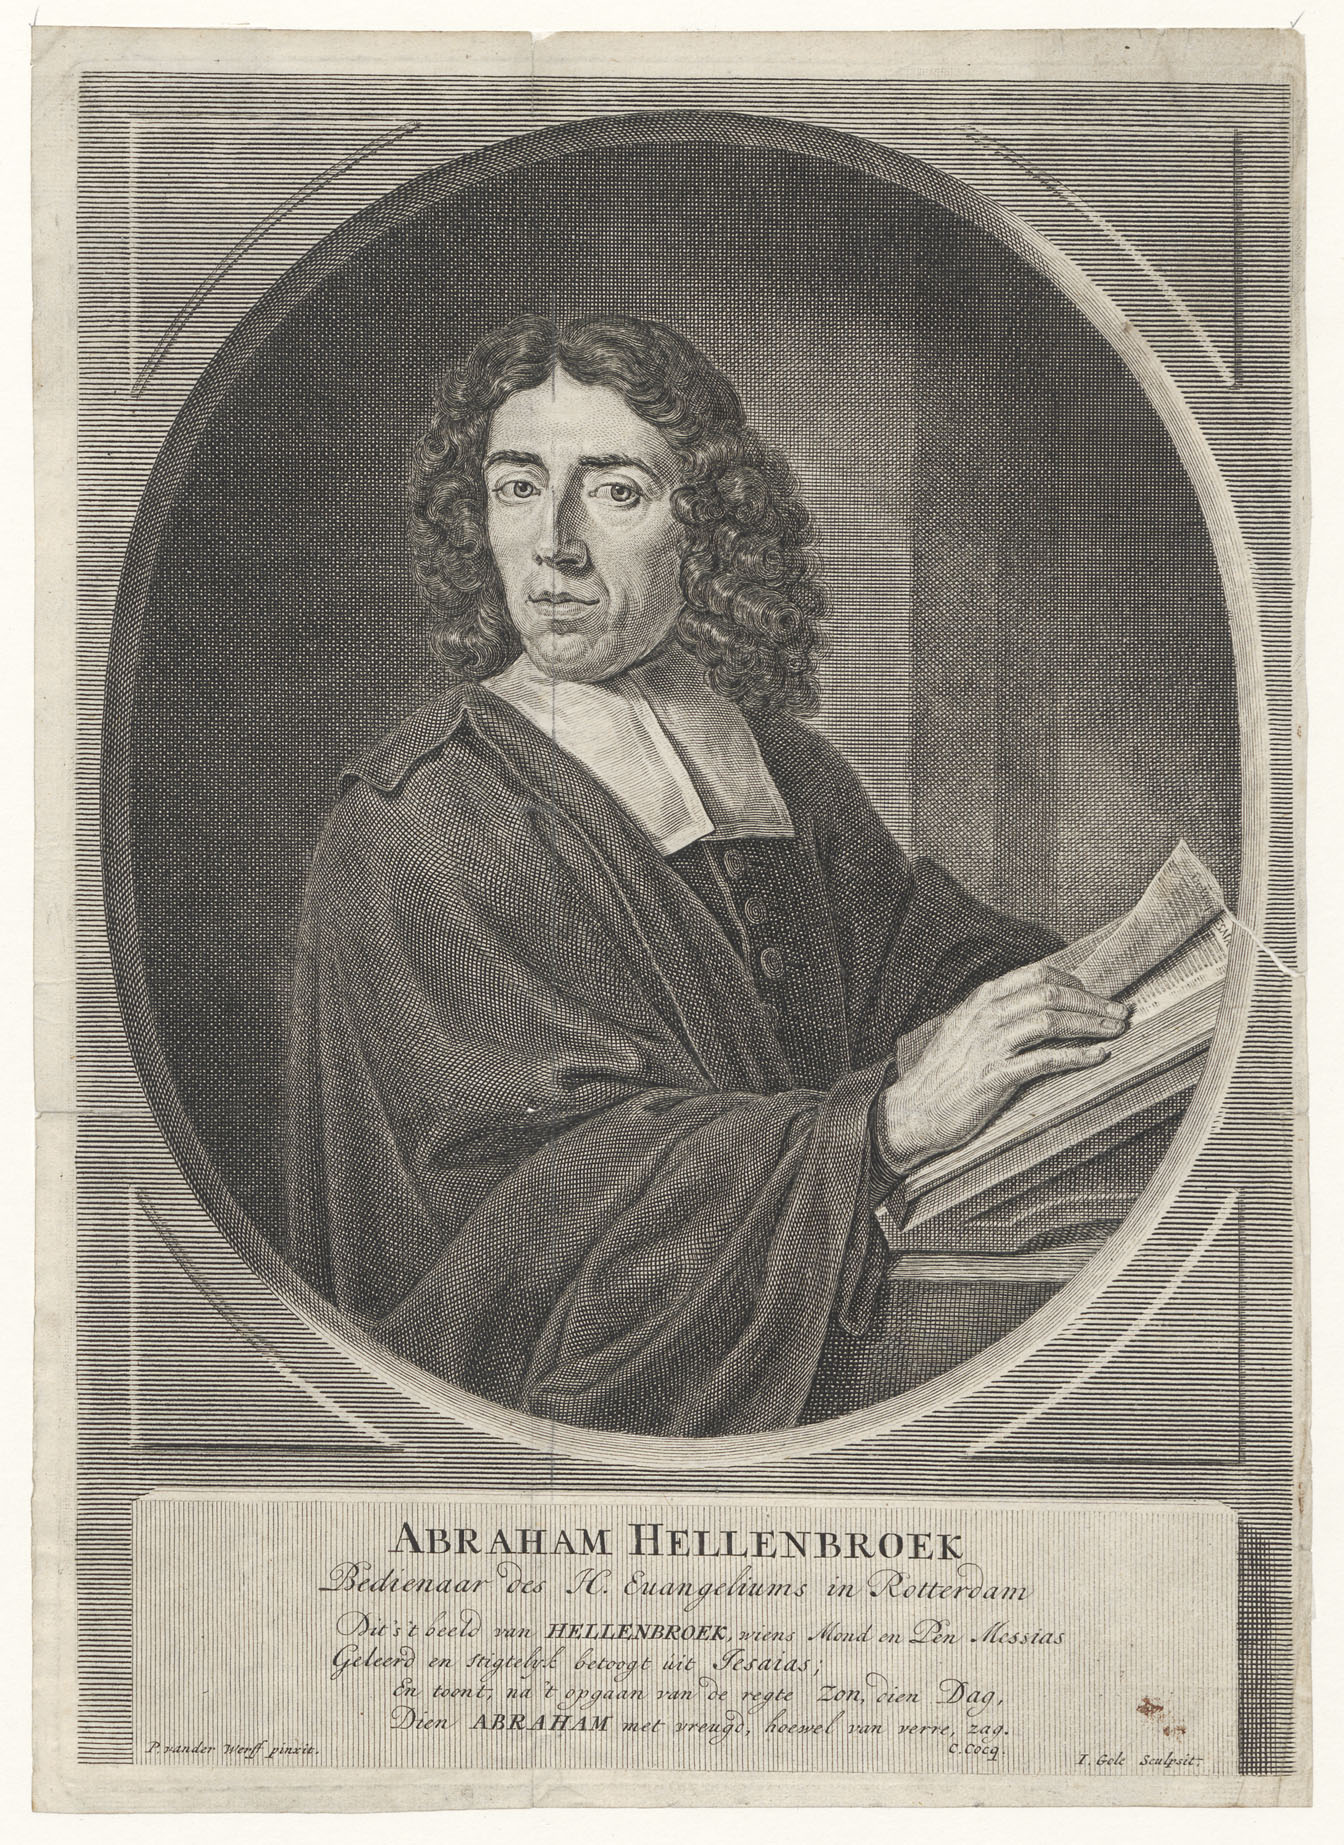 Hellenbroek, Abraham